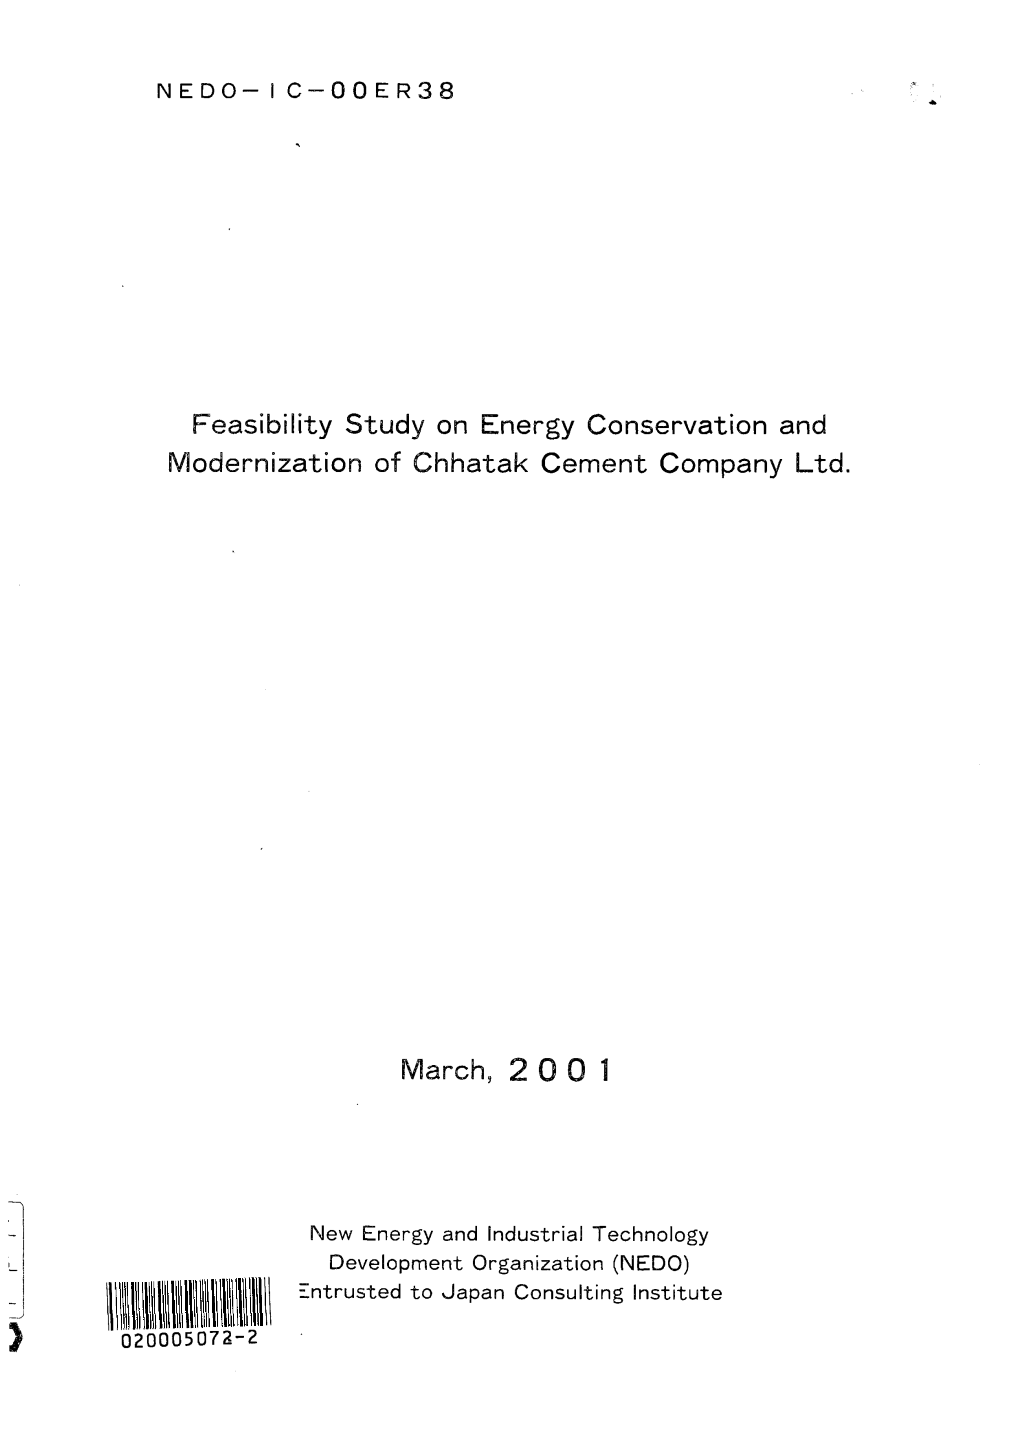 Feasibility Study on Energy Conservation and Modernization of Chhatak Cement Company Ltd